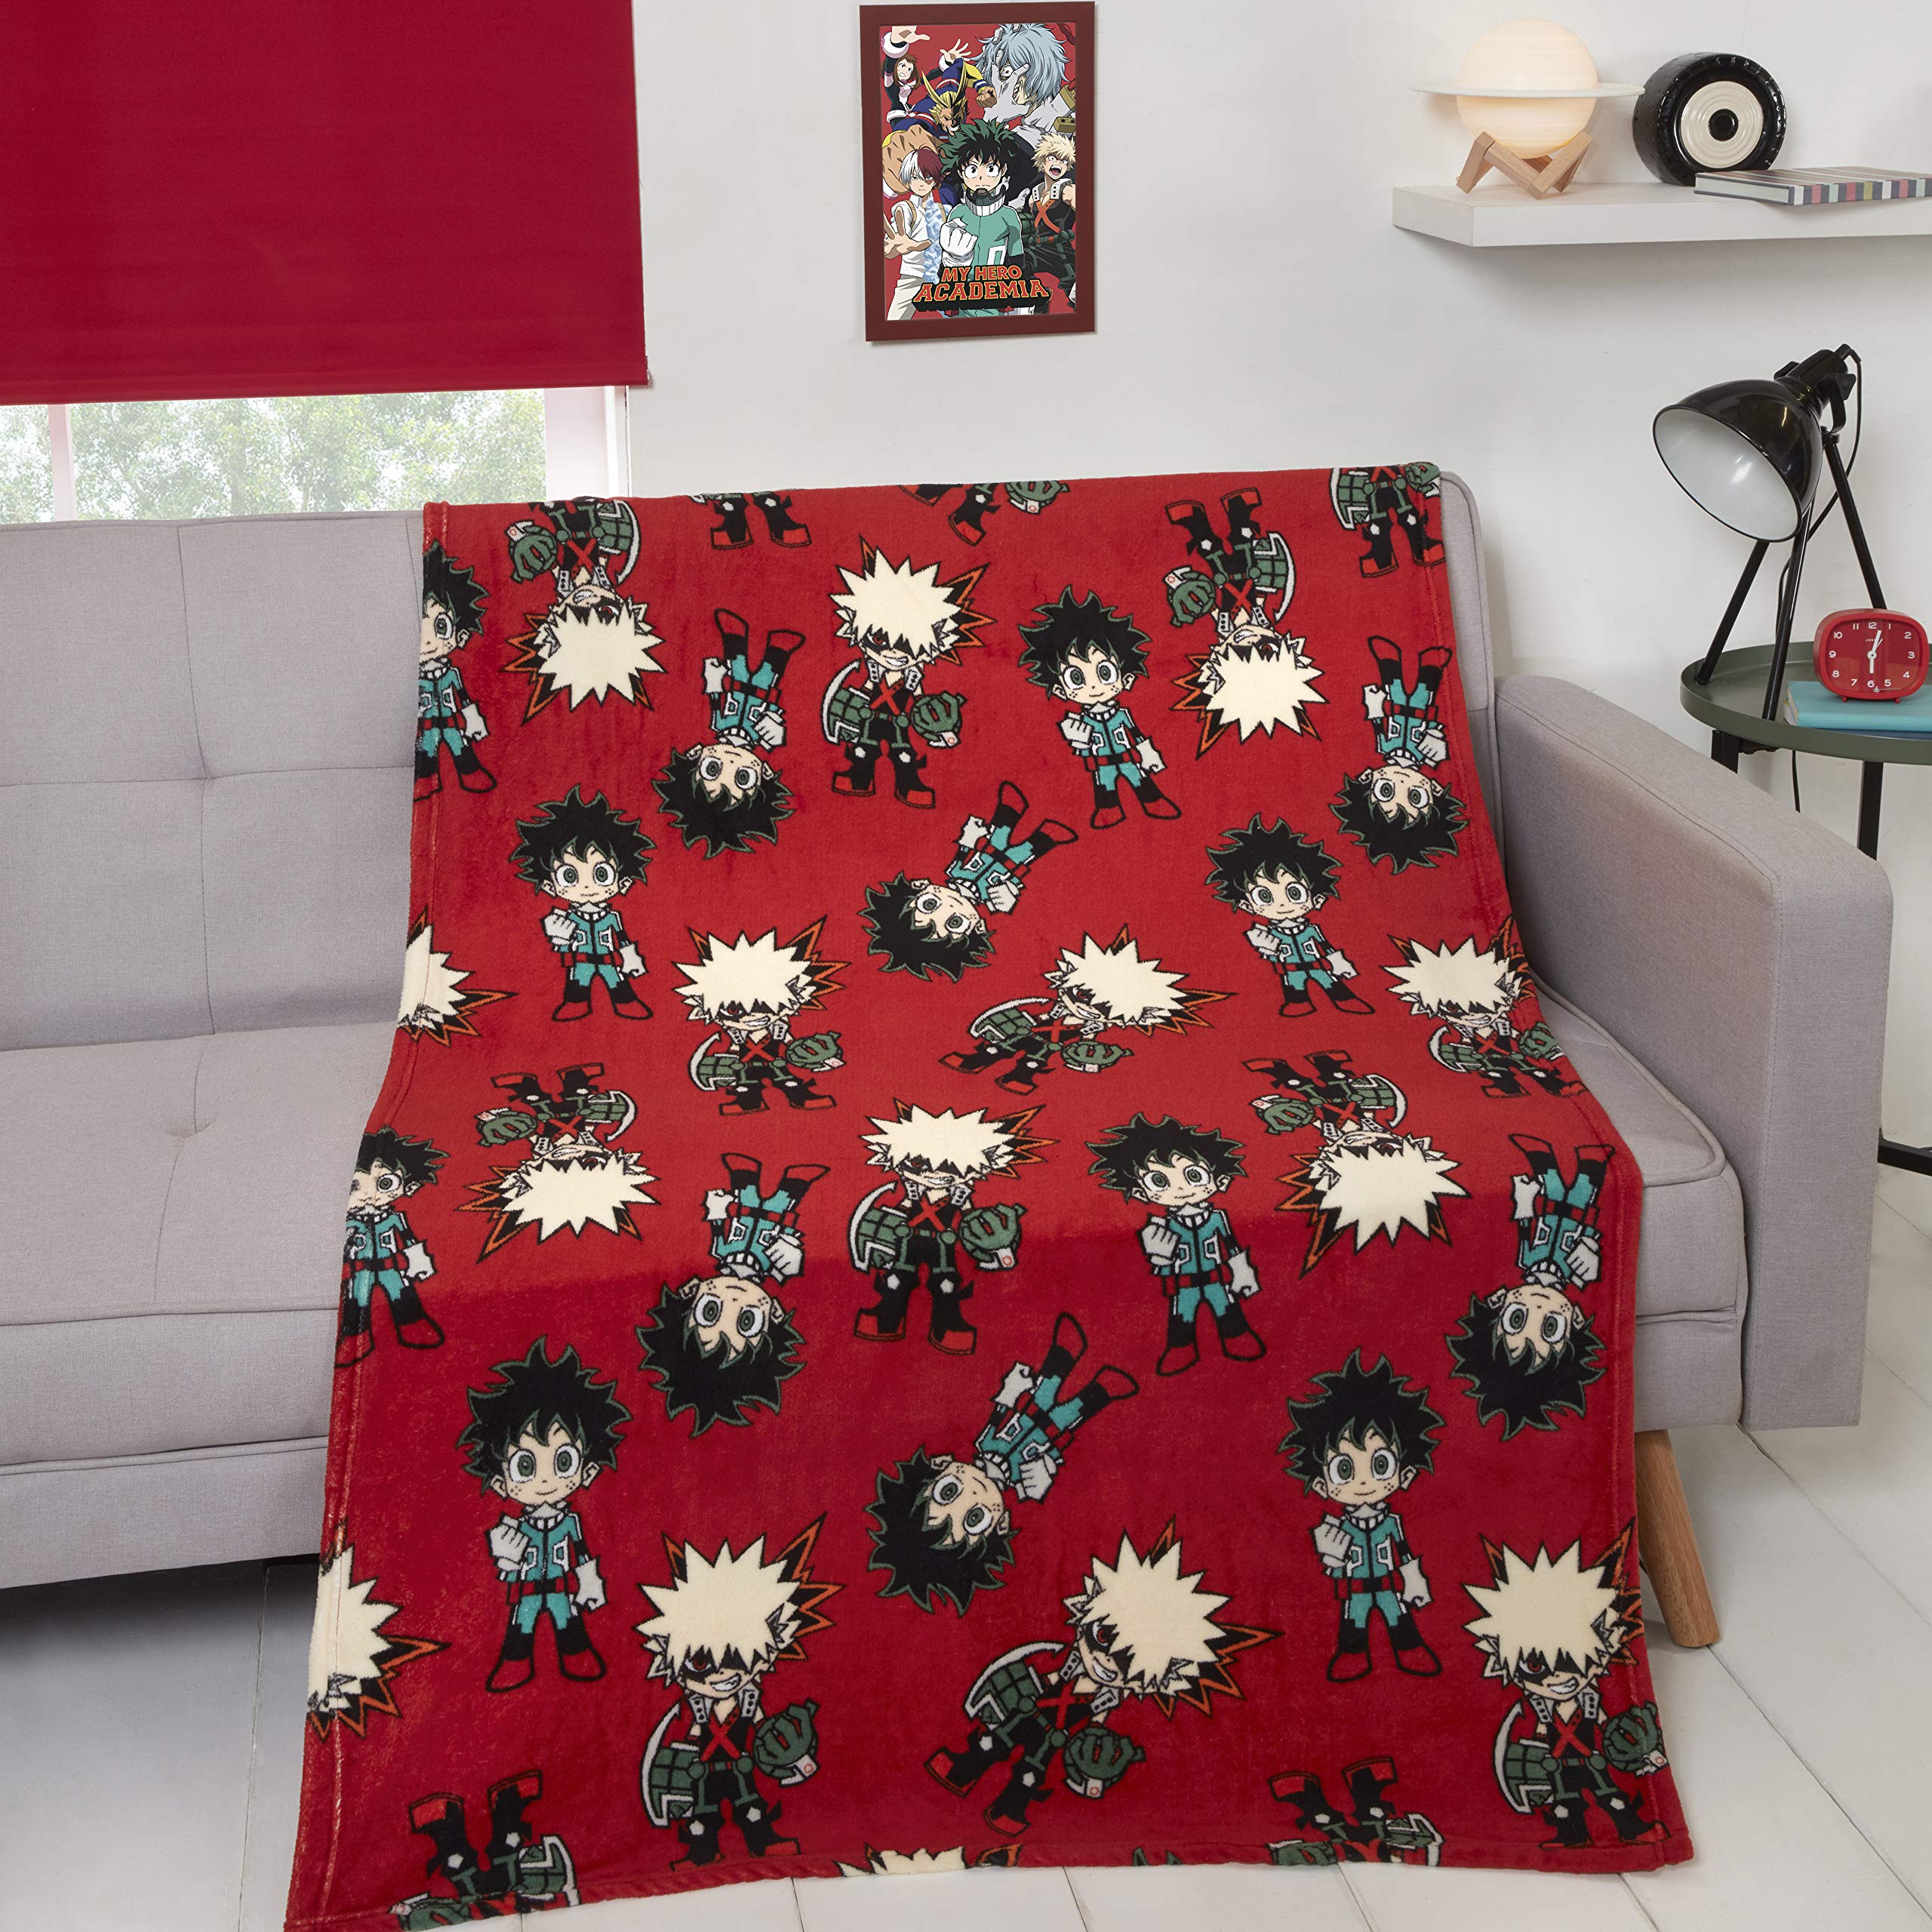 Coco Moon My Hero Academia Bed Fleece Blanket Bedding Ideal Anime Enthusiastic Bedroom Accessories Gifts Present